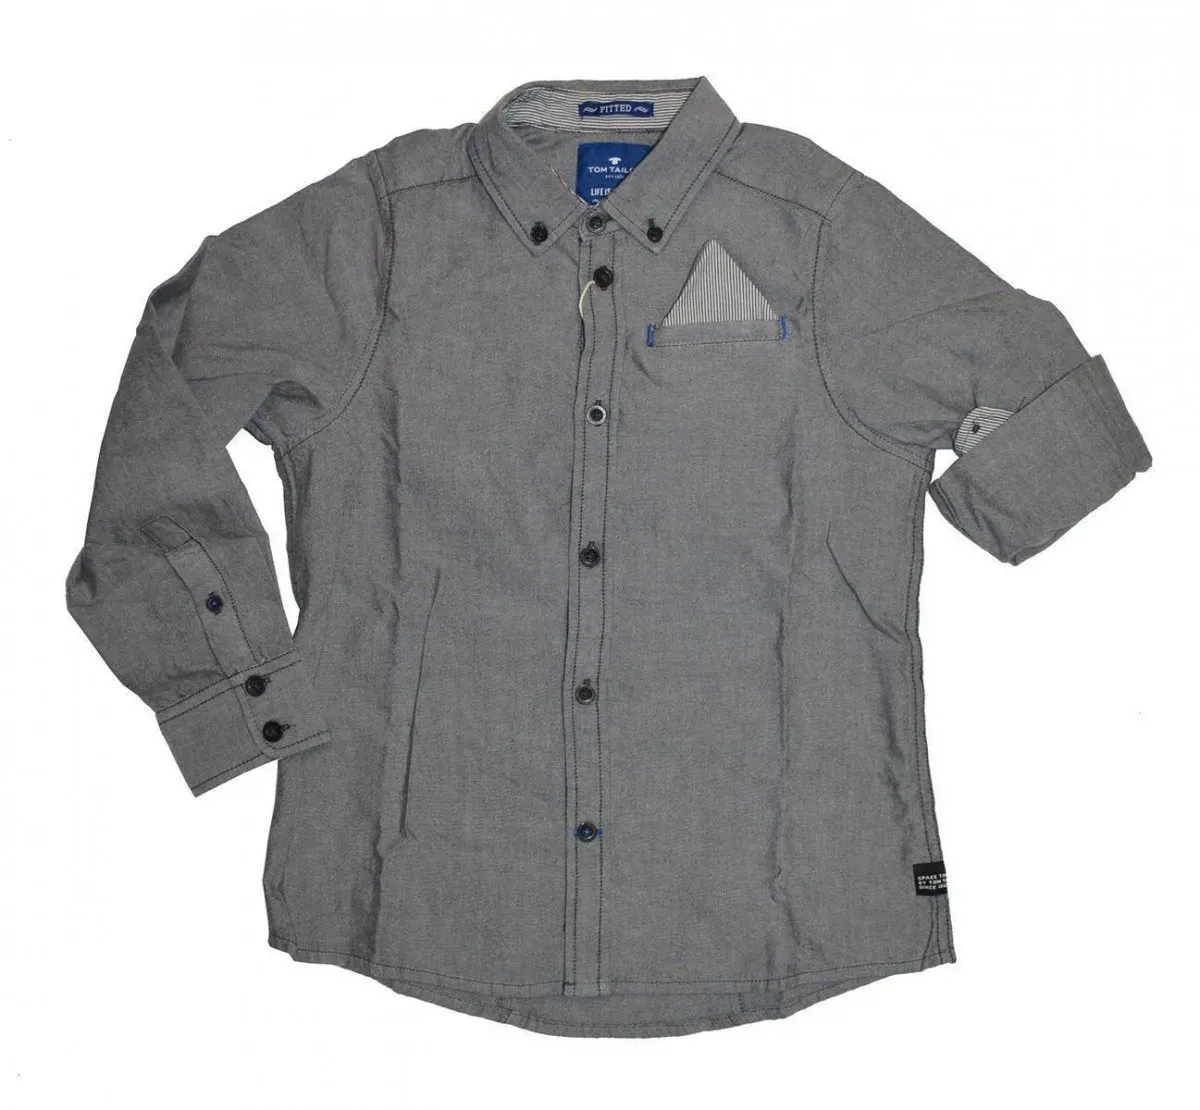 Tom Tailor Hemd dressy oxford shirt 140 - Größe:140